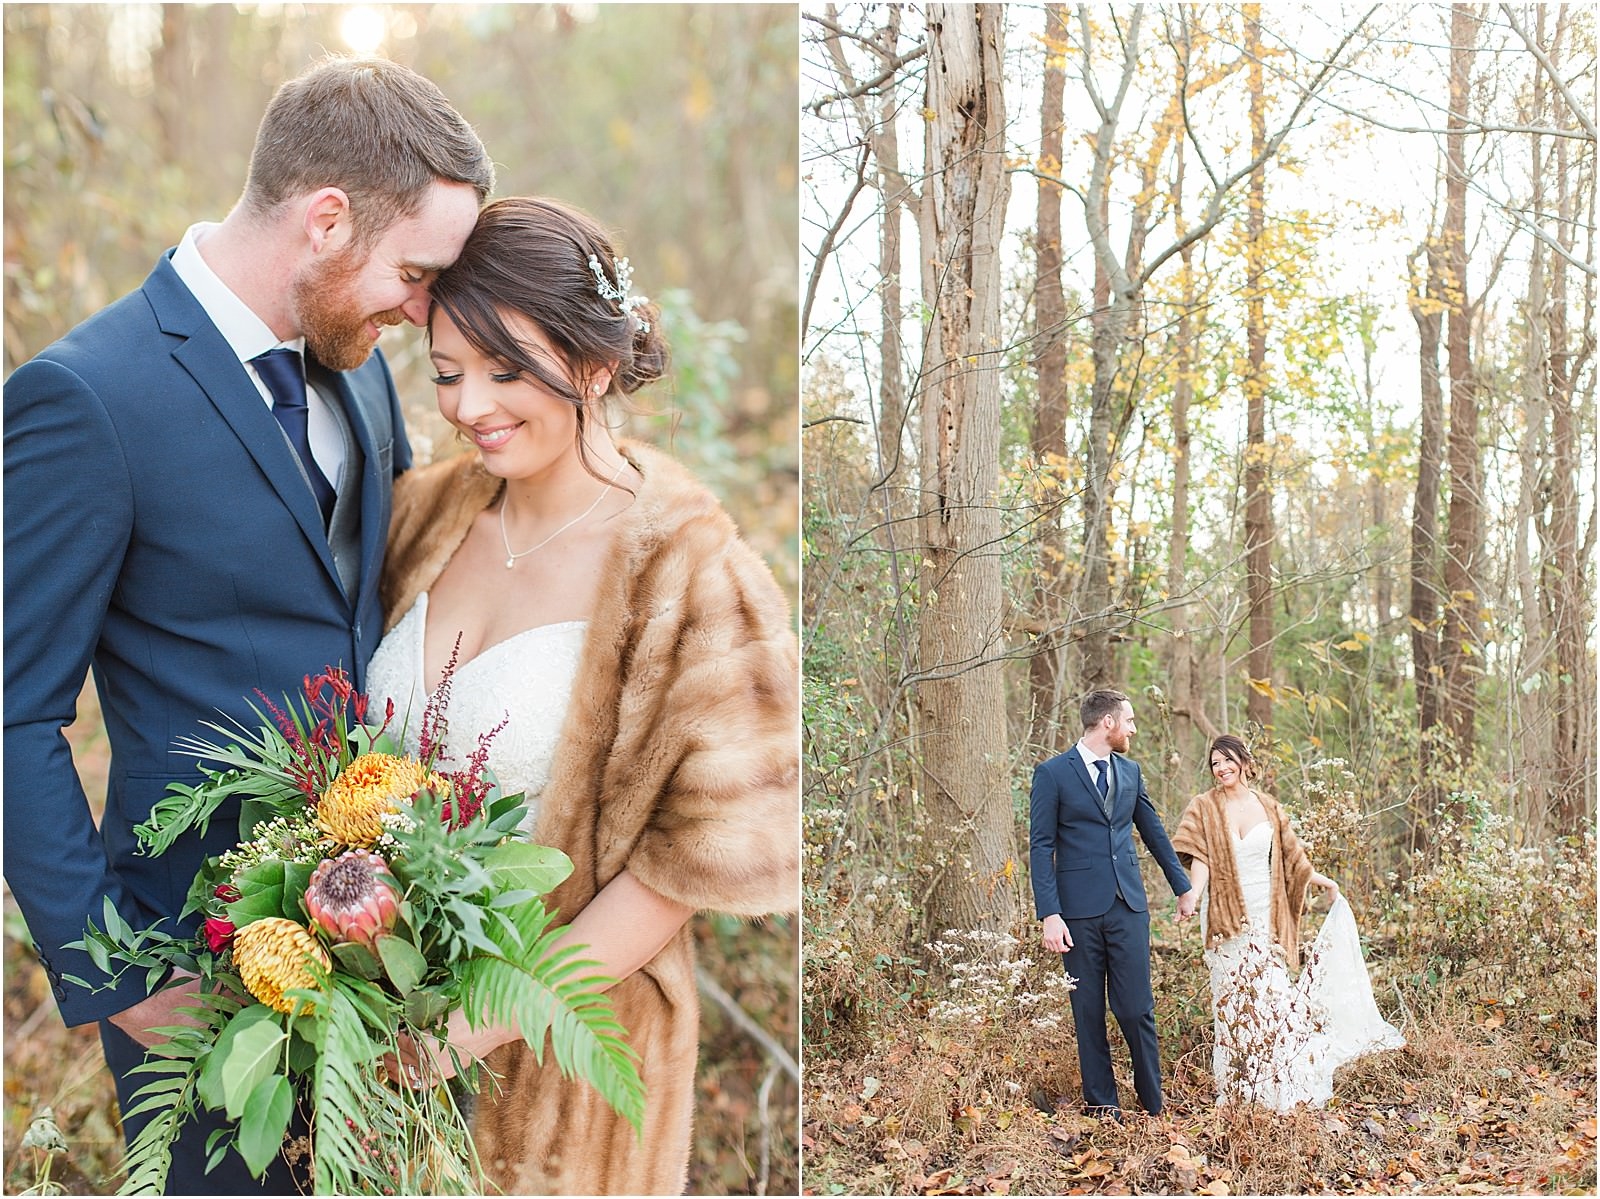 Walker and Alyssa's intimate fall wedding in Southern Indiana. | Wedding Photography | The Corner House Wedding | Southern Indiana Wedding | #fallwedding #intimatewedding | 081.jpg